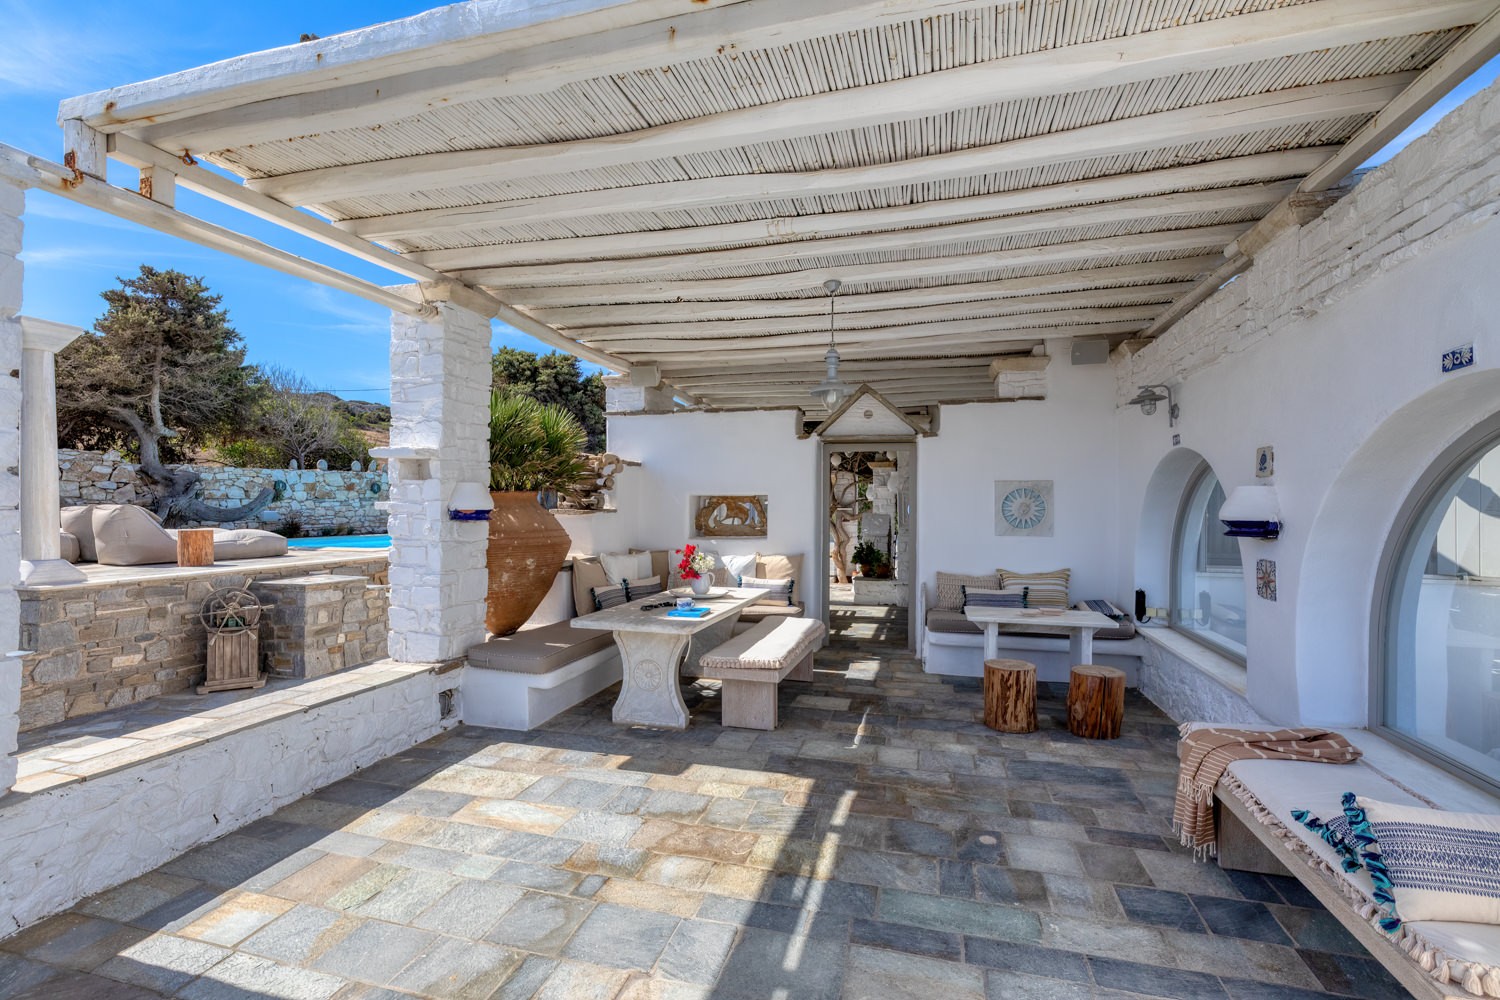 Amalgam Homes Agia Thalassa villa, Paros island: image interior gallery